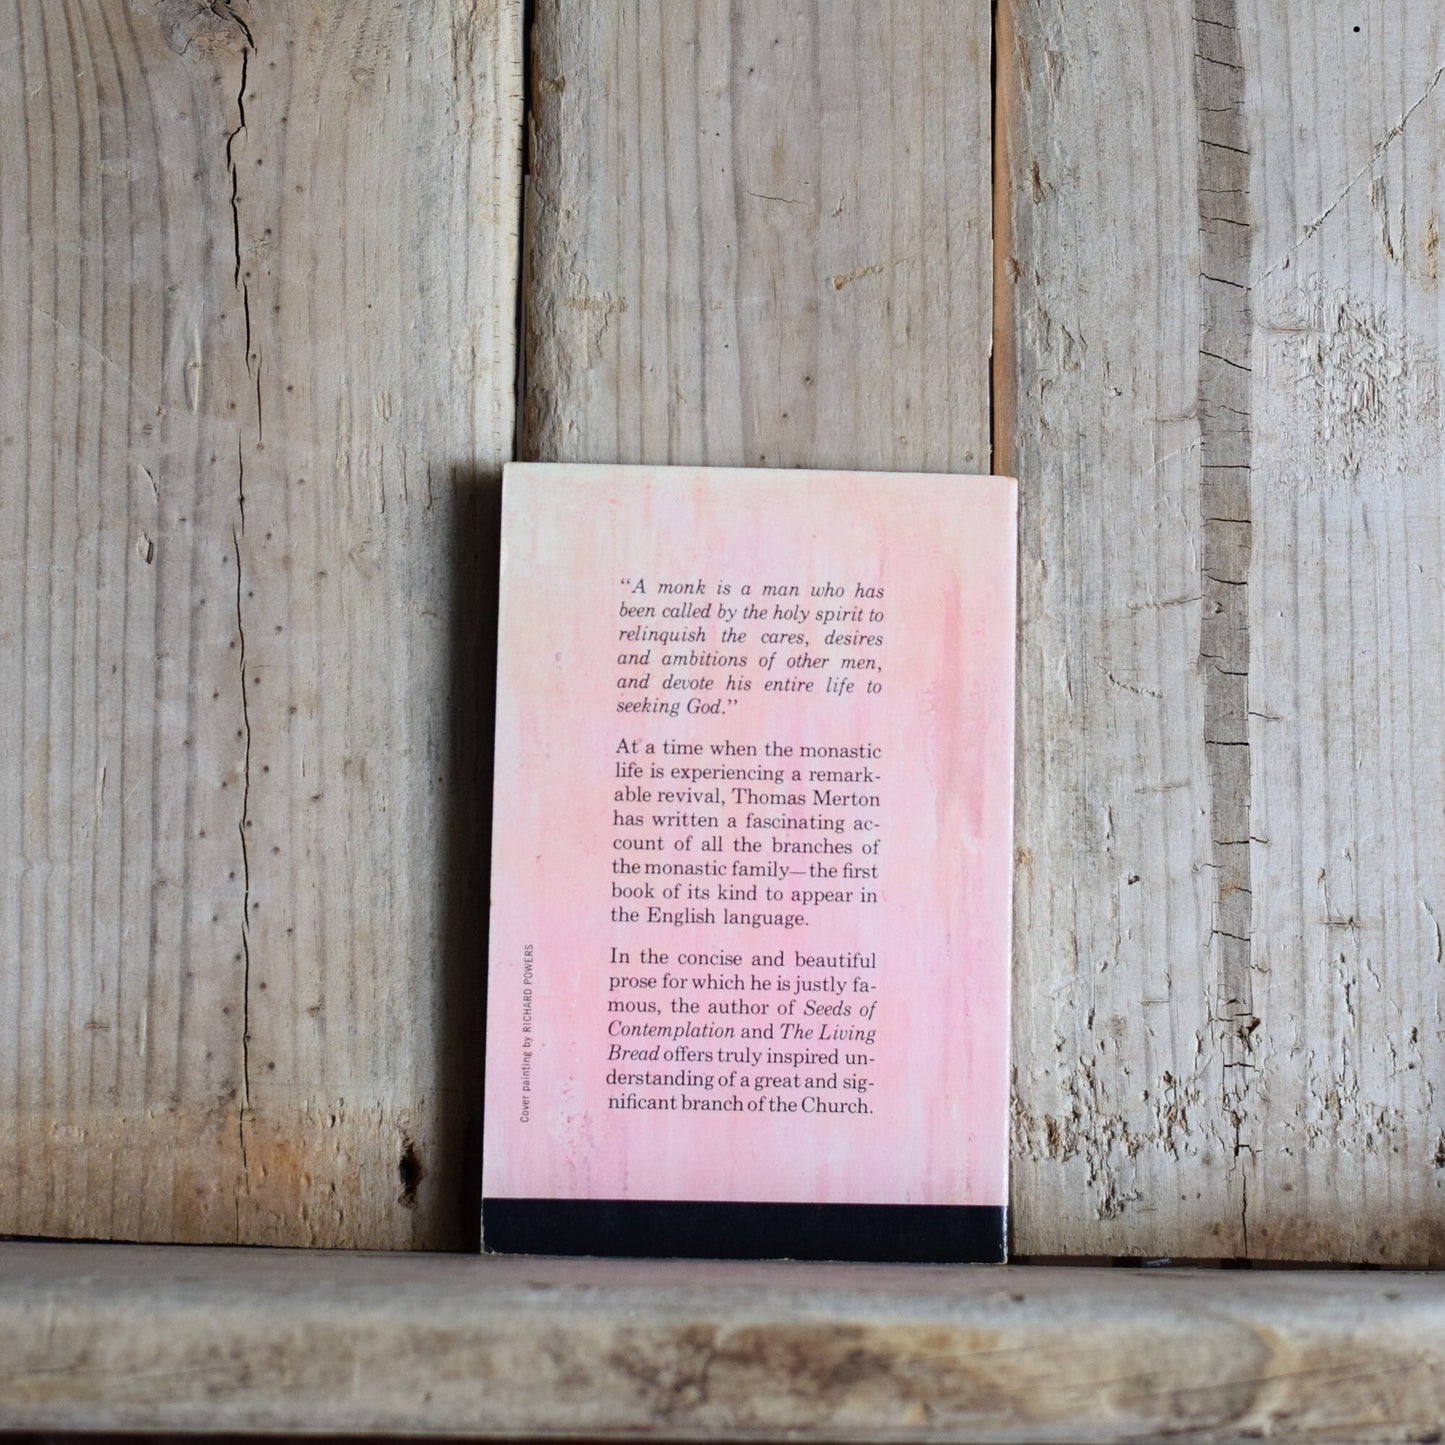 Vintage Fiction Paperback Novel: Thomas Merton - The Silent Life FIRST PRINTING